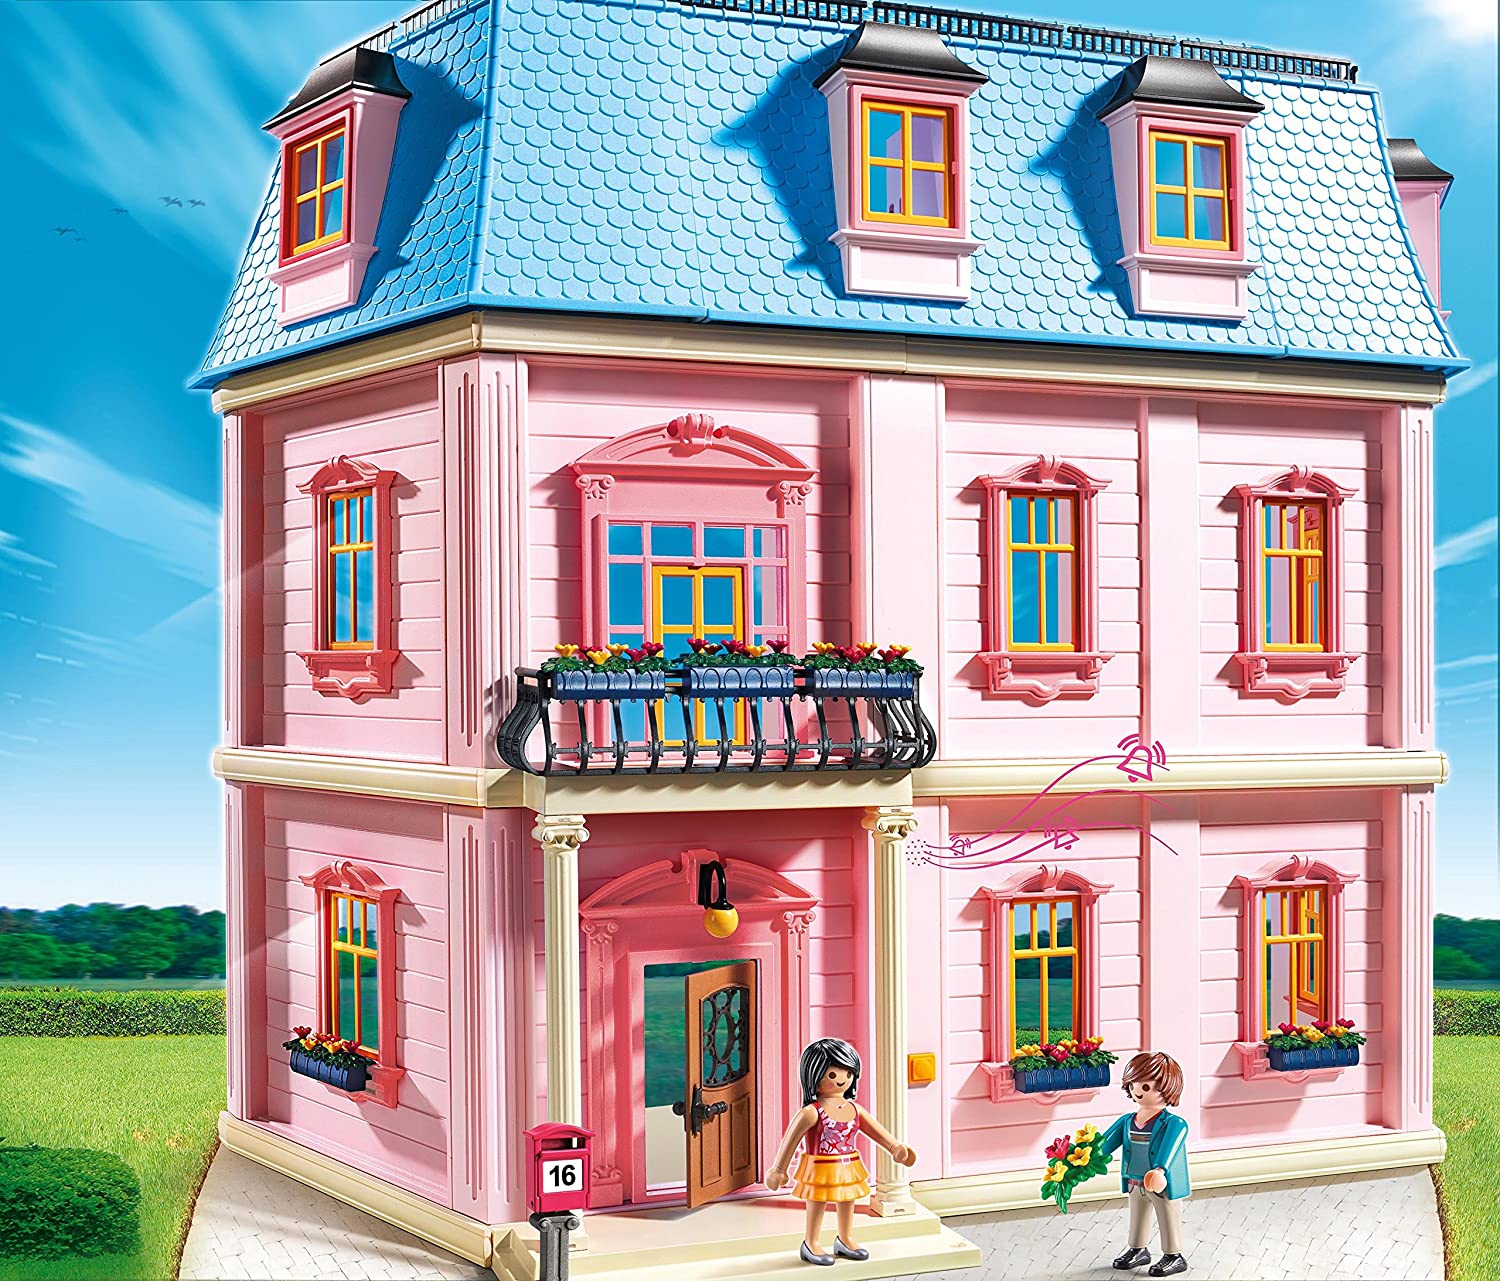 Playmobil City Life Maison Moderne 9266 - Monsieur Jouet